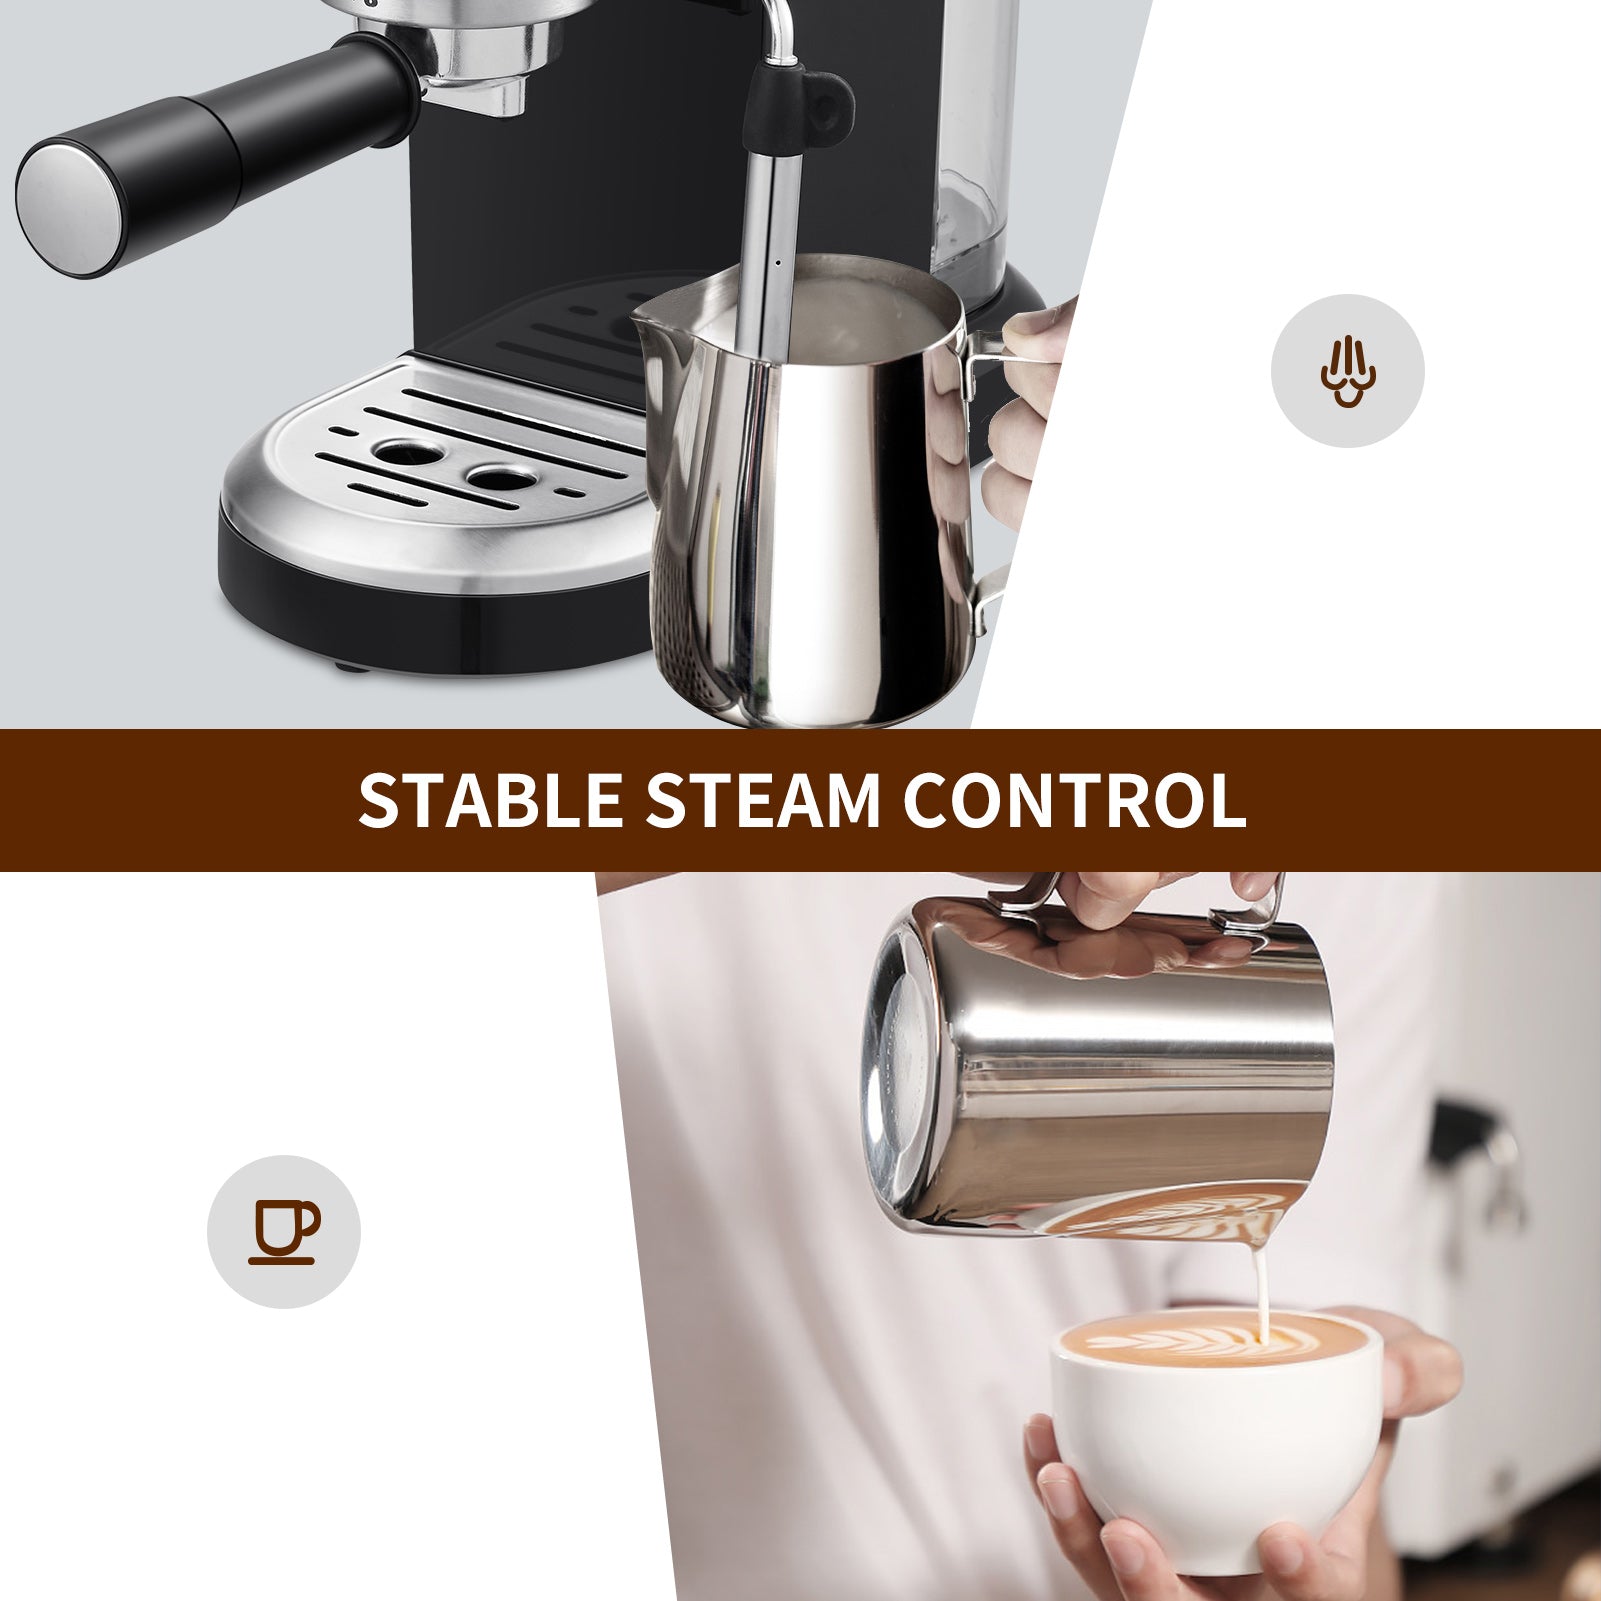 20 Bar Espresso Machine, 1350W Compact Espresso Cofee Machine for Home